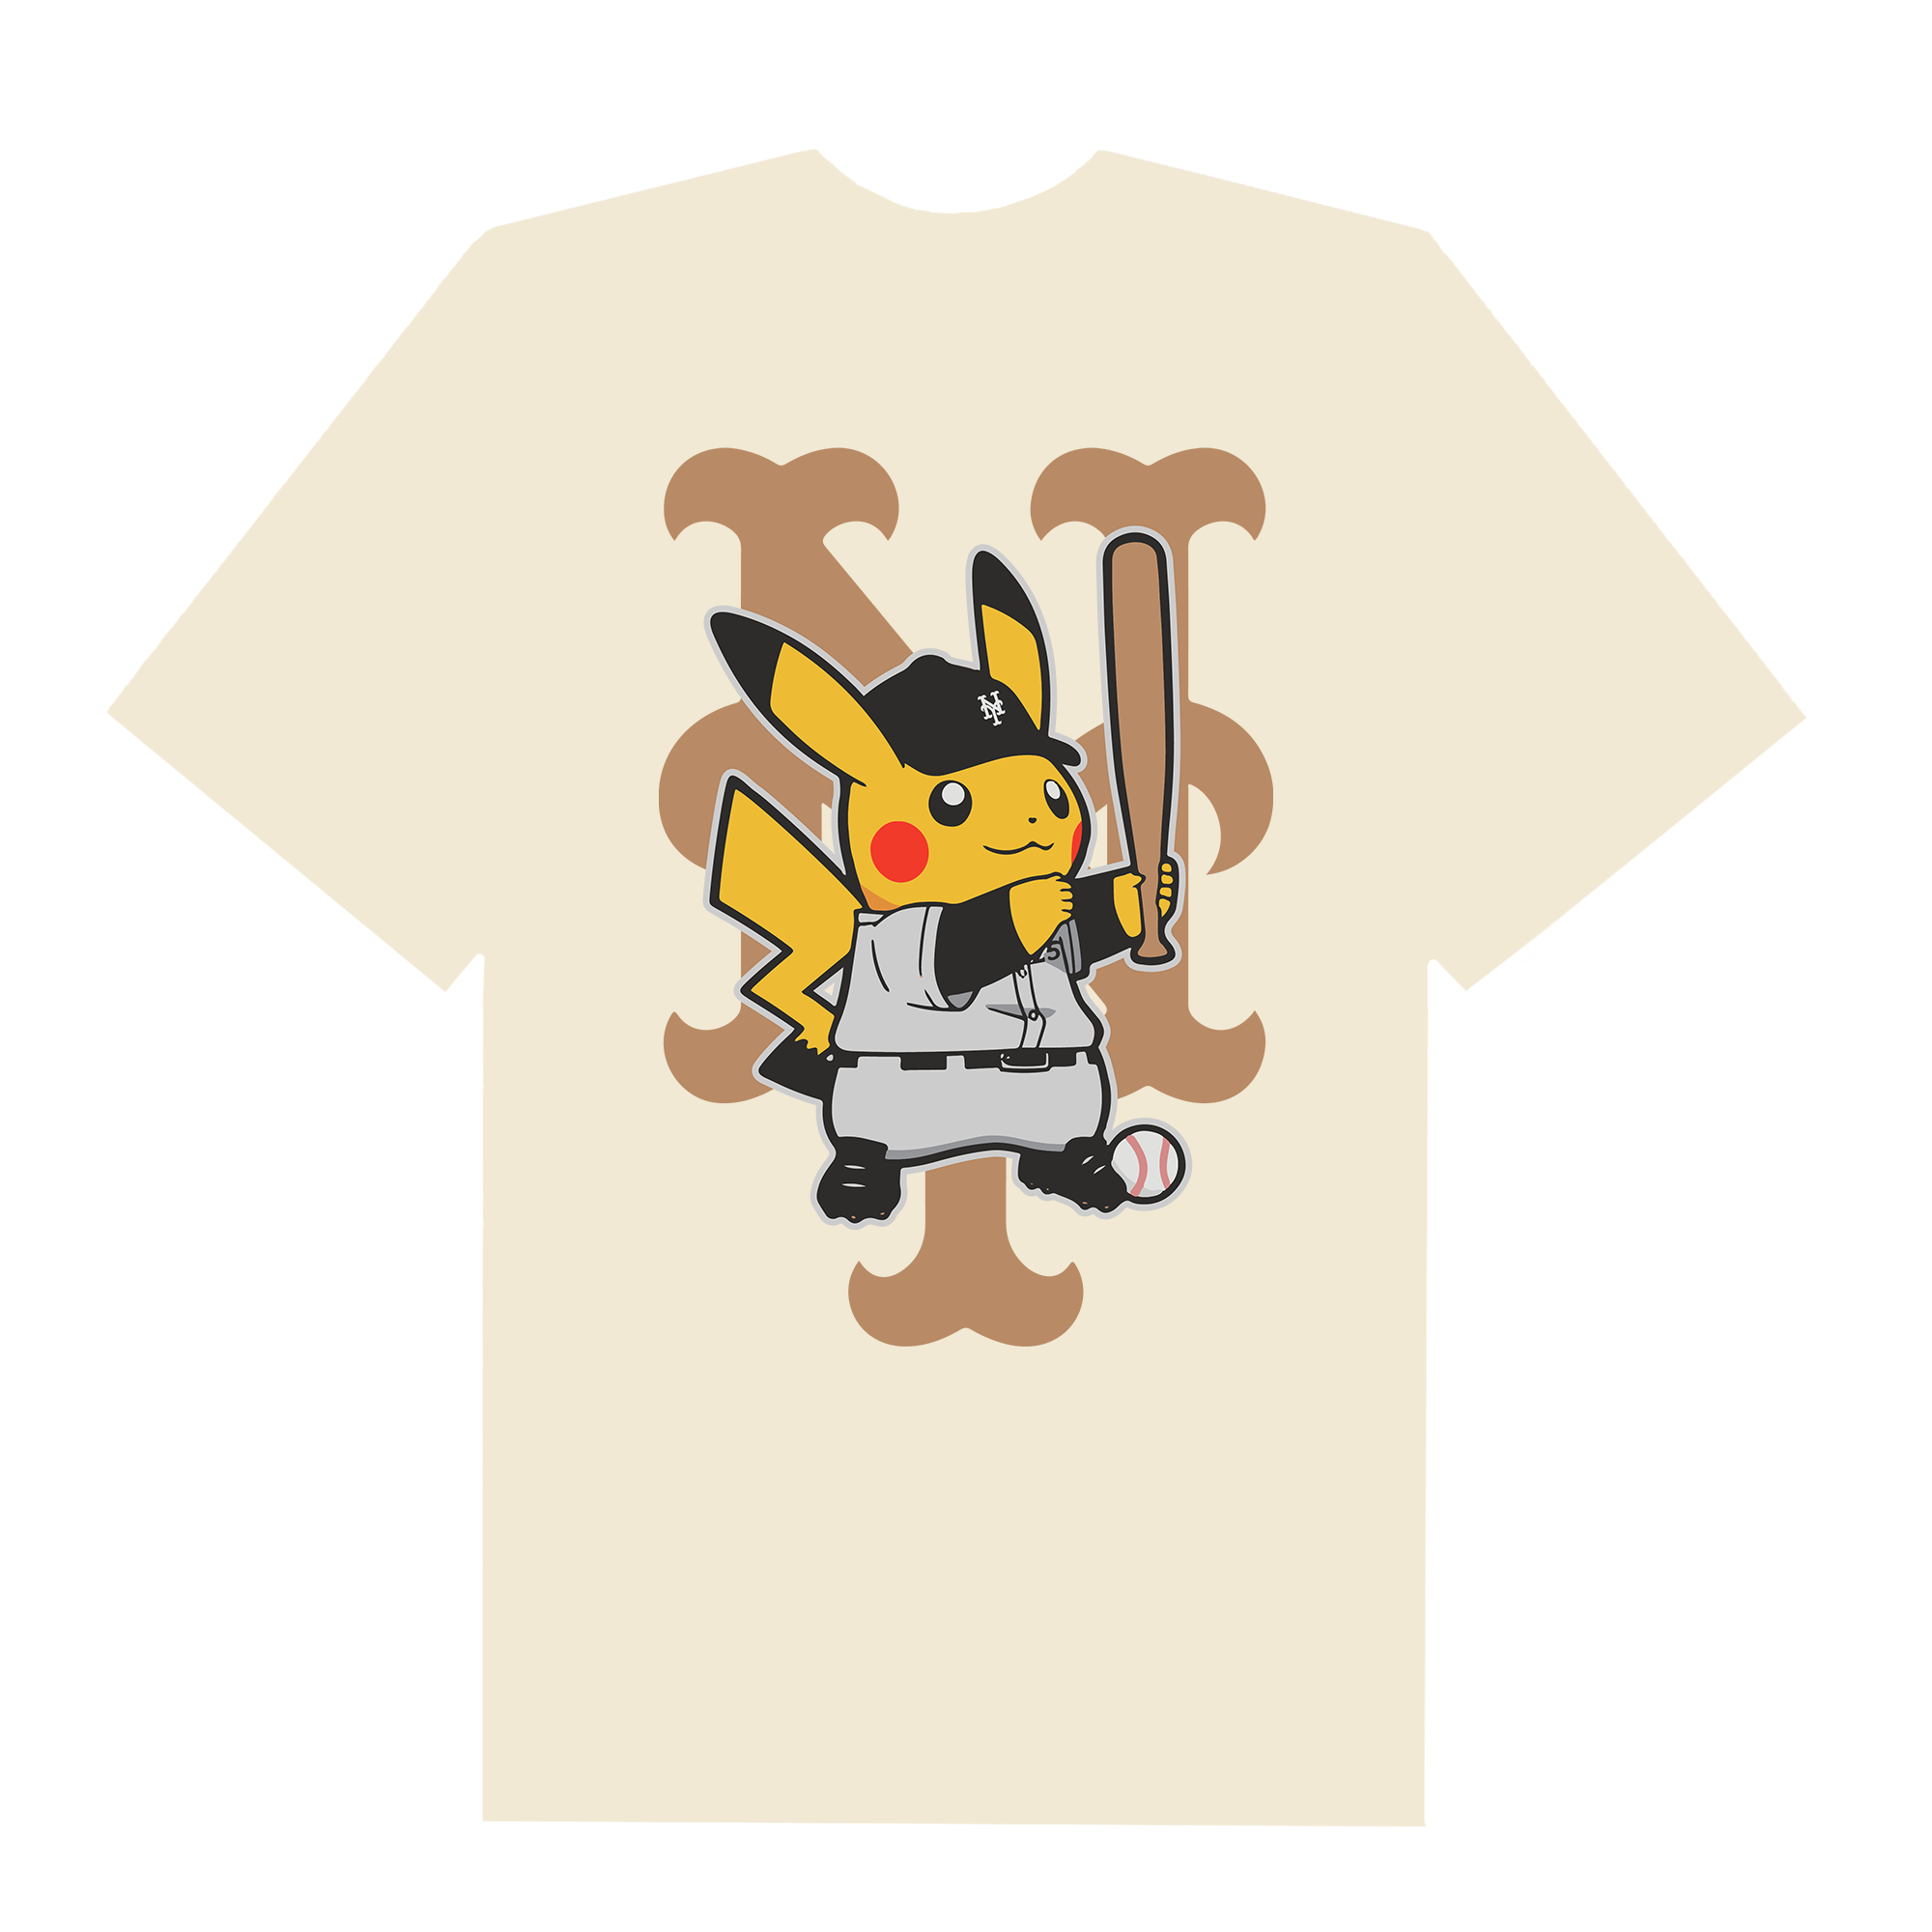 MLB Anime Pokemon Pikachu NY T-Shirt